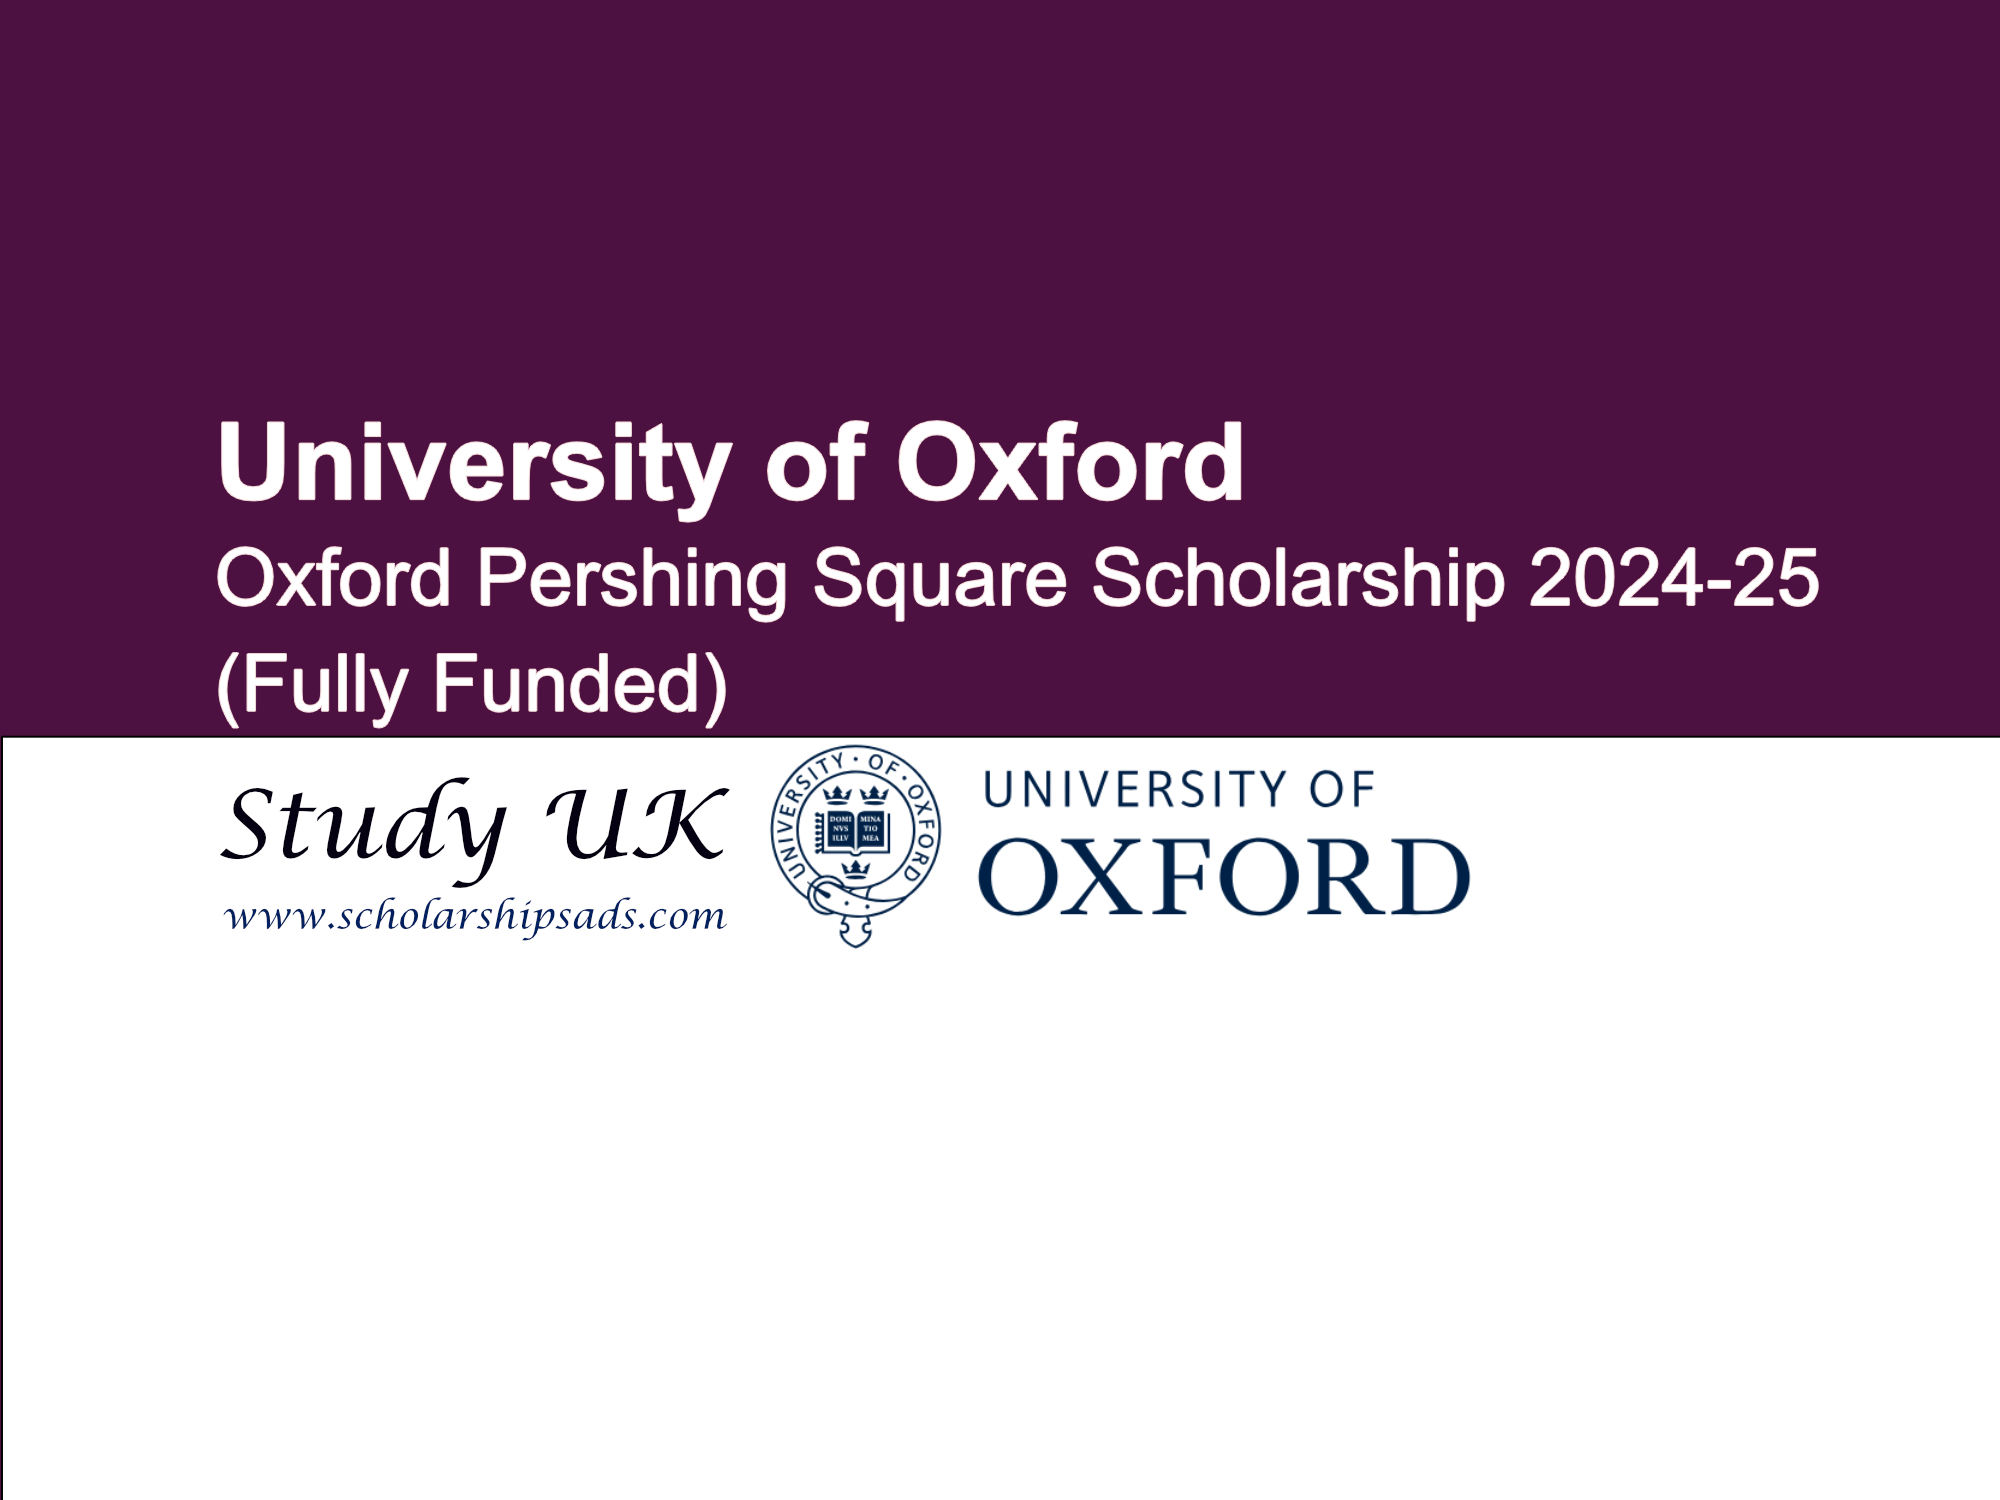 Oxford Pershing Square Scholarship 2024-25, UK. (Fully Funded)